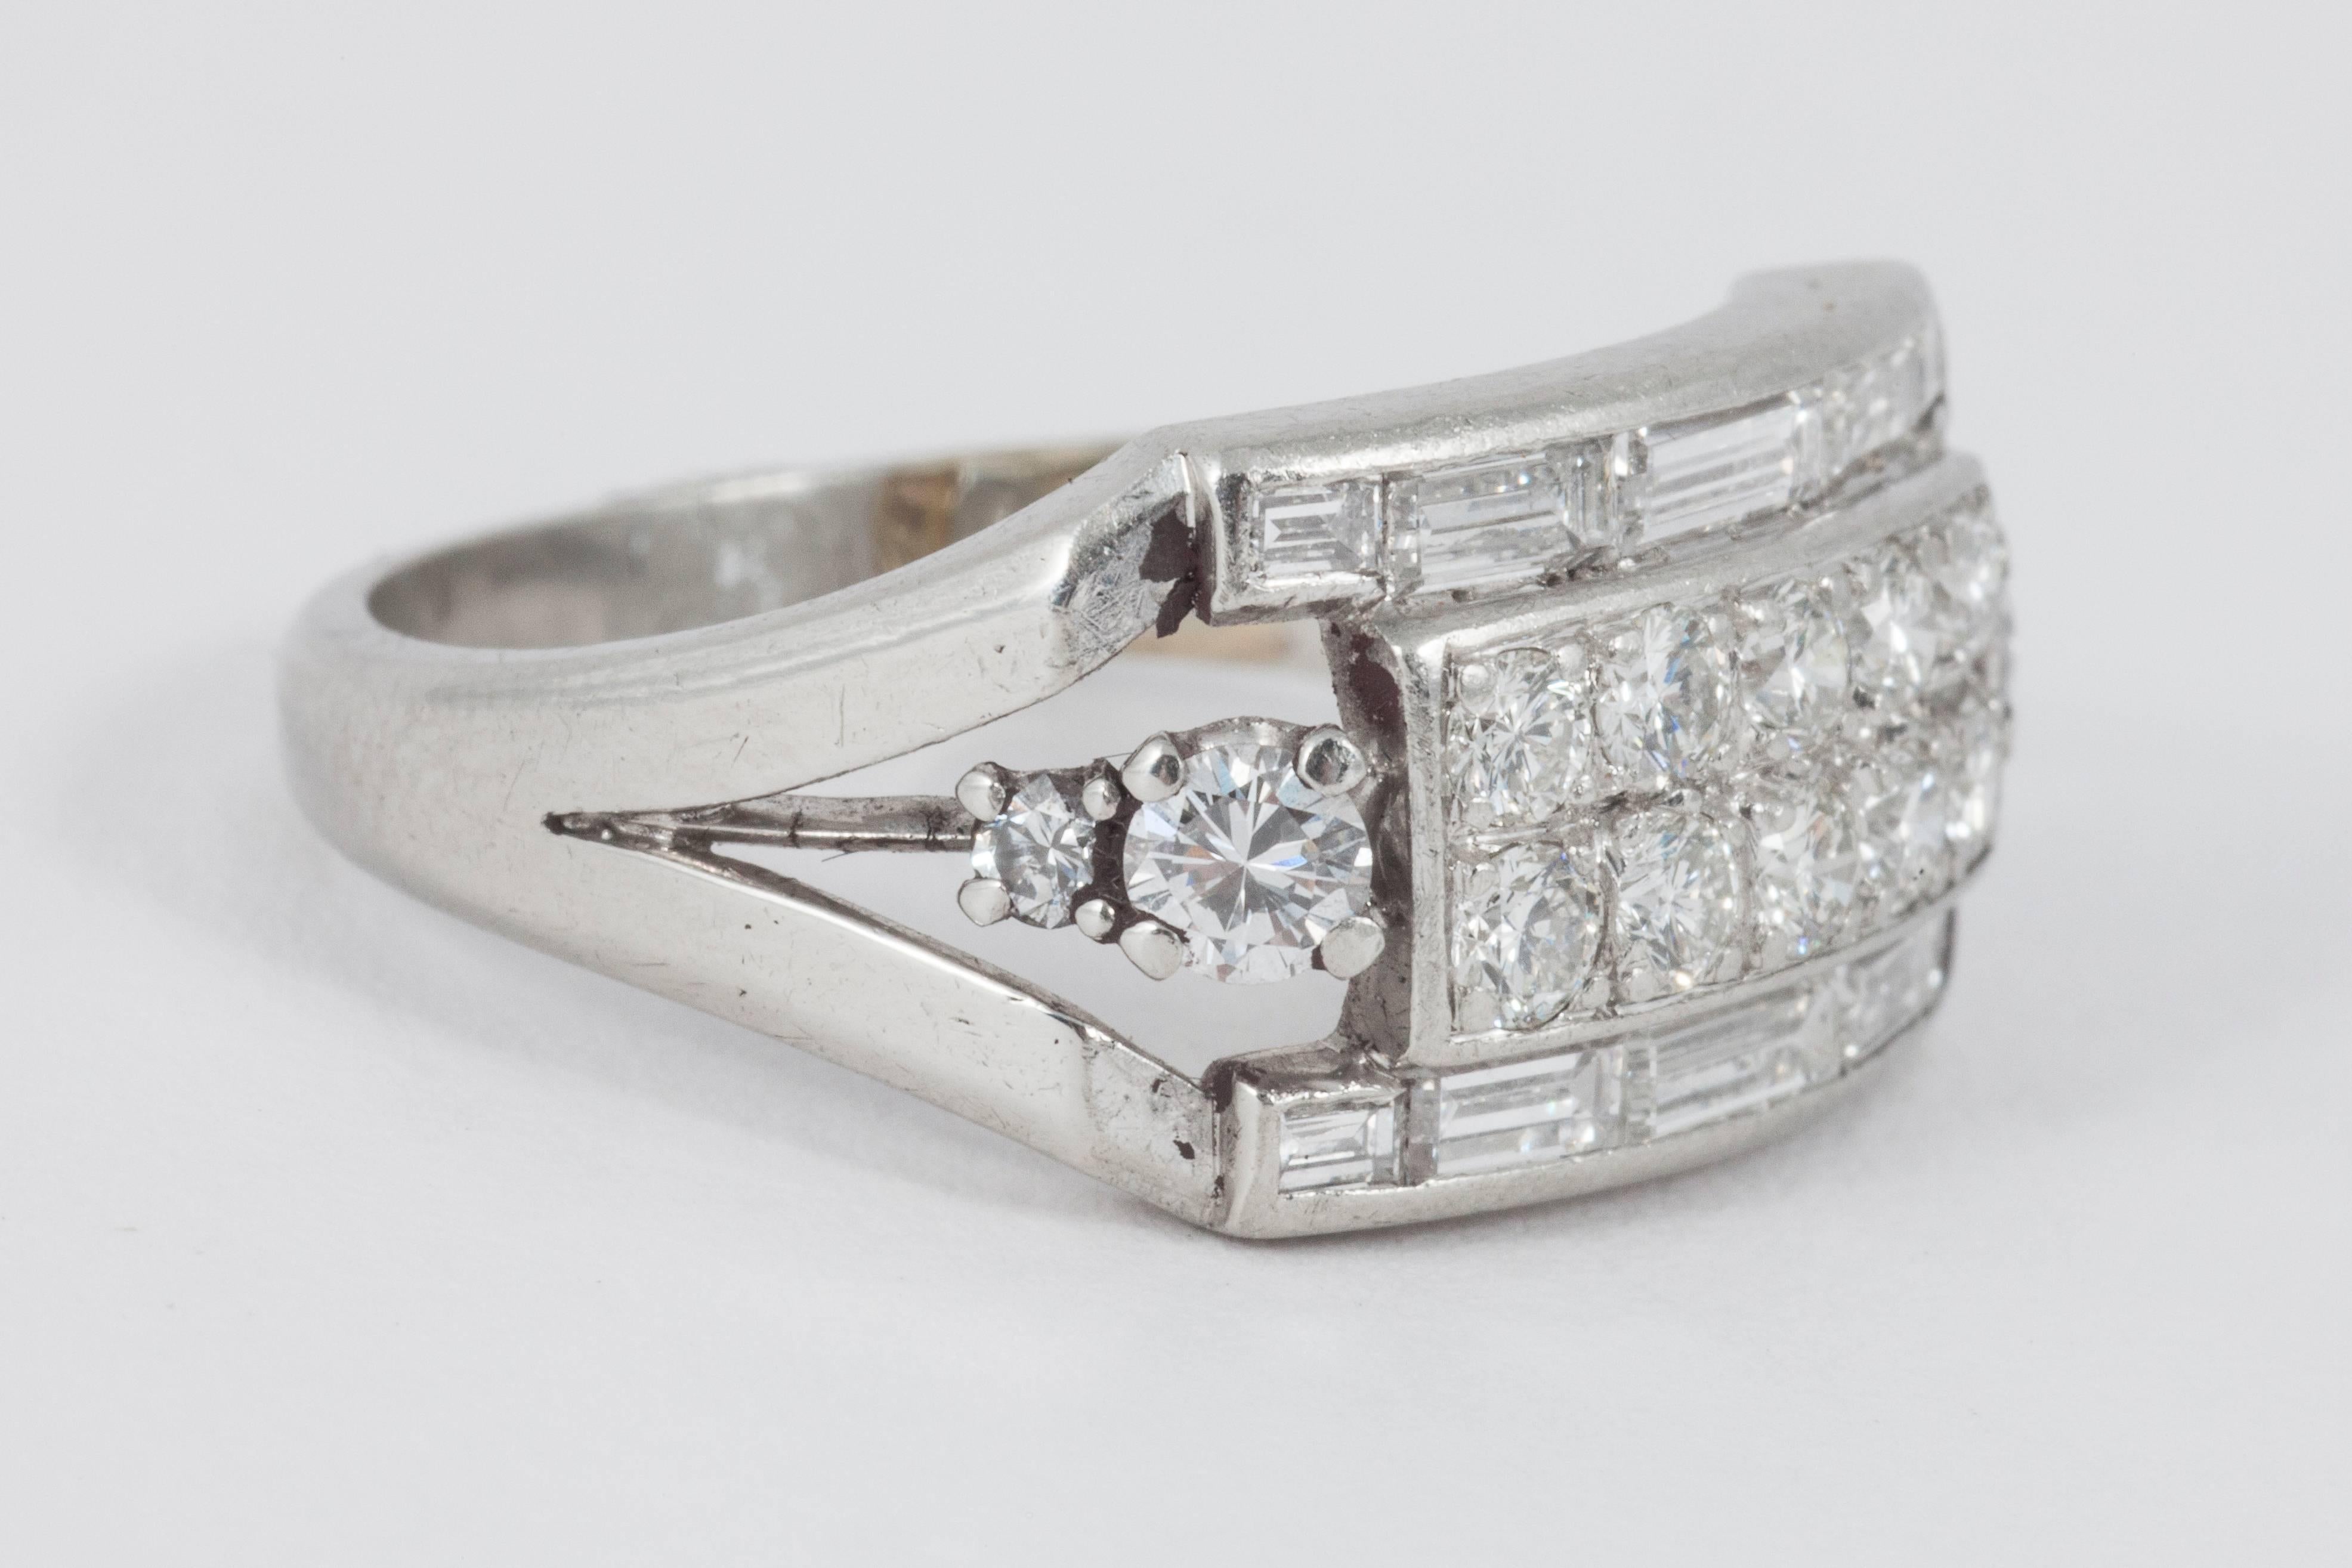 An art deco diamond dress ring set with old round brilliant diamonds, and baguette cut diamonds, set in platinum